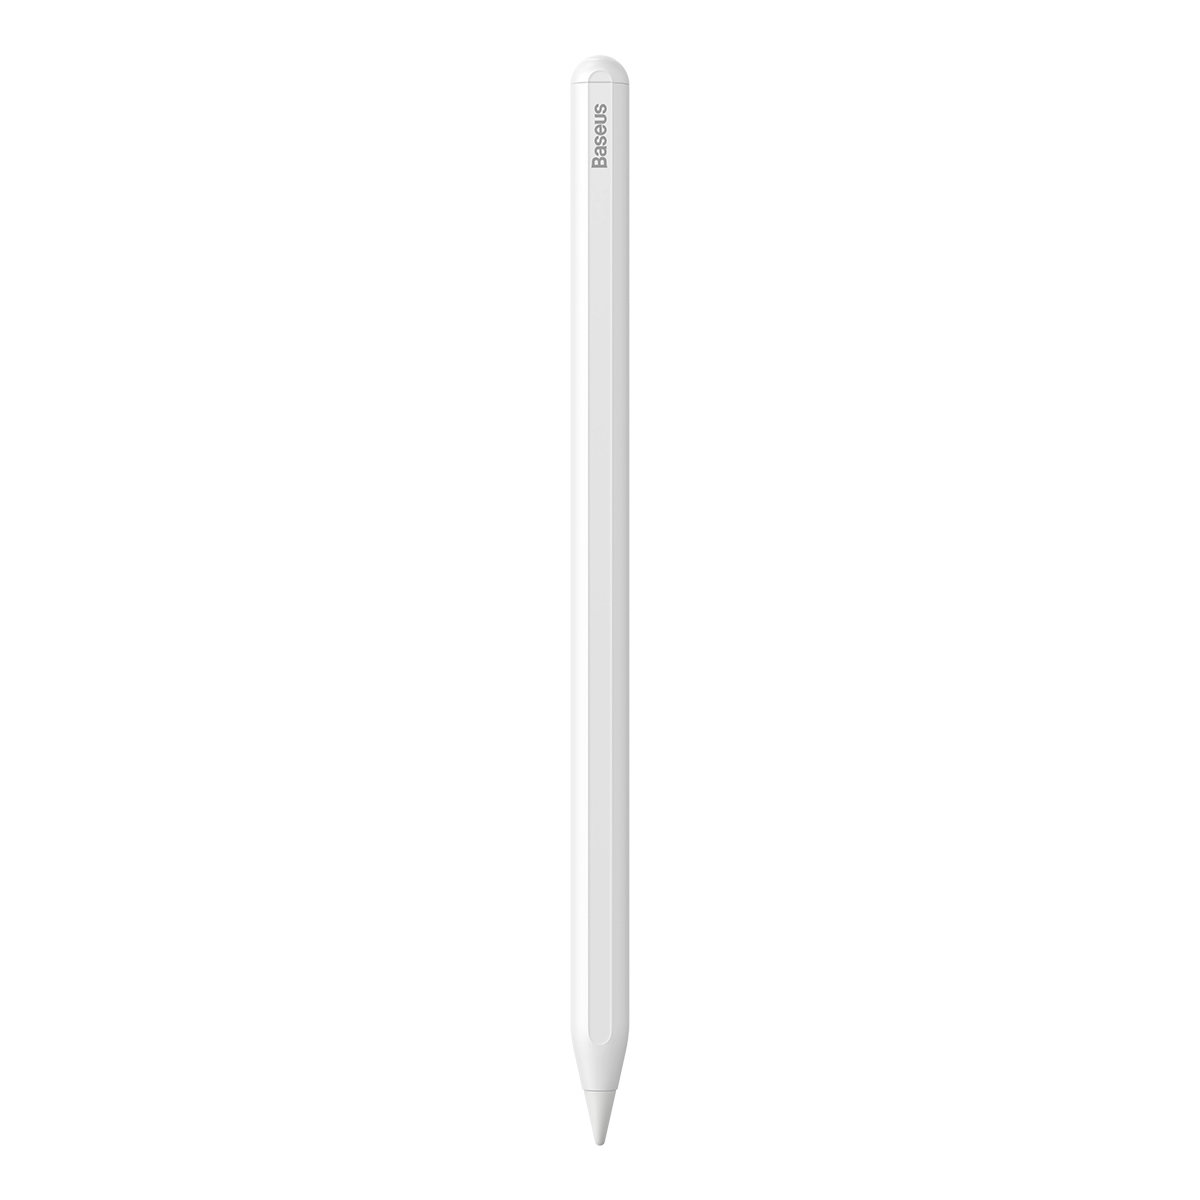 Baseus iPad Pencil with Wireless Charging